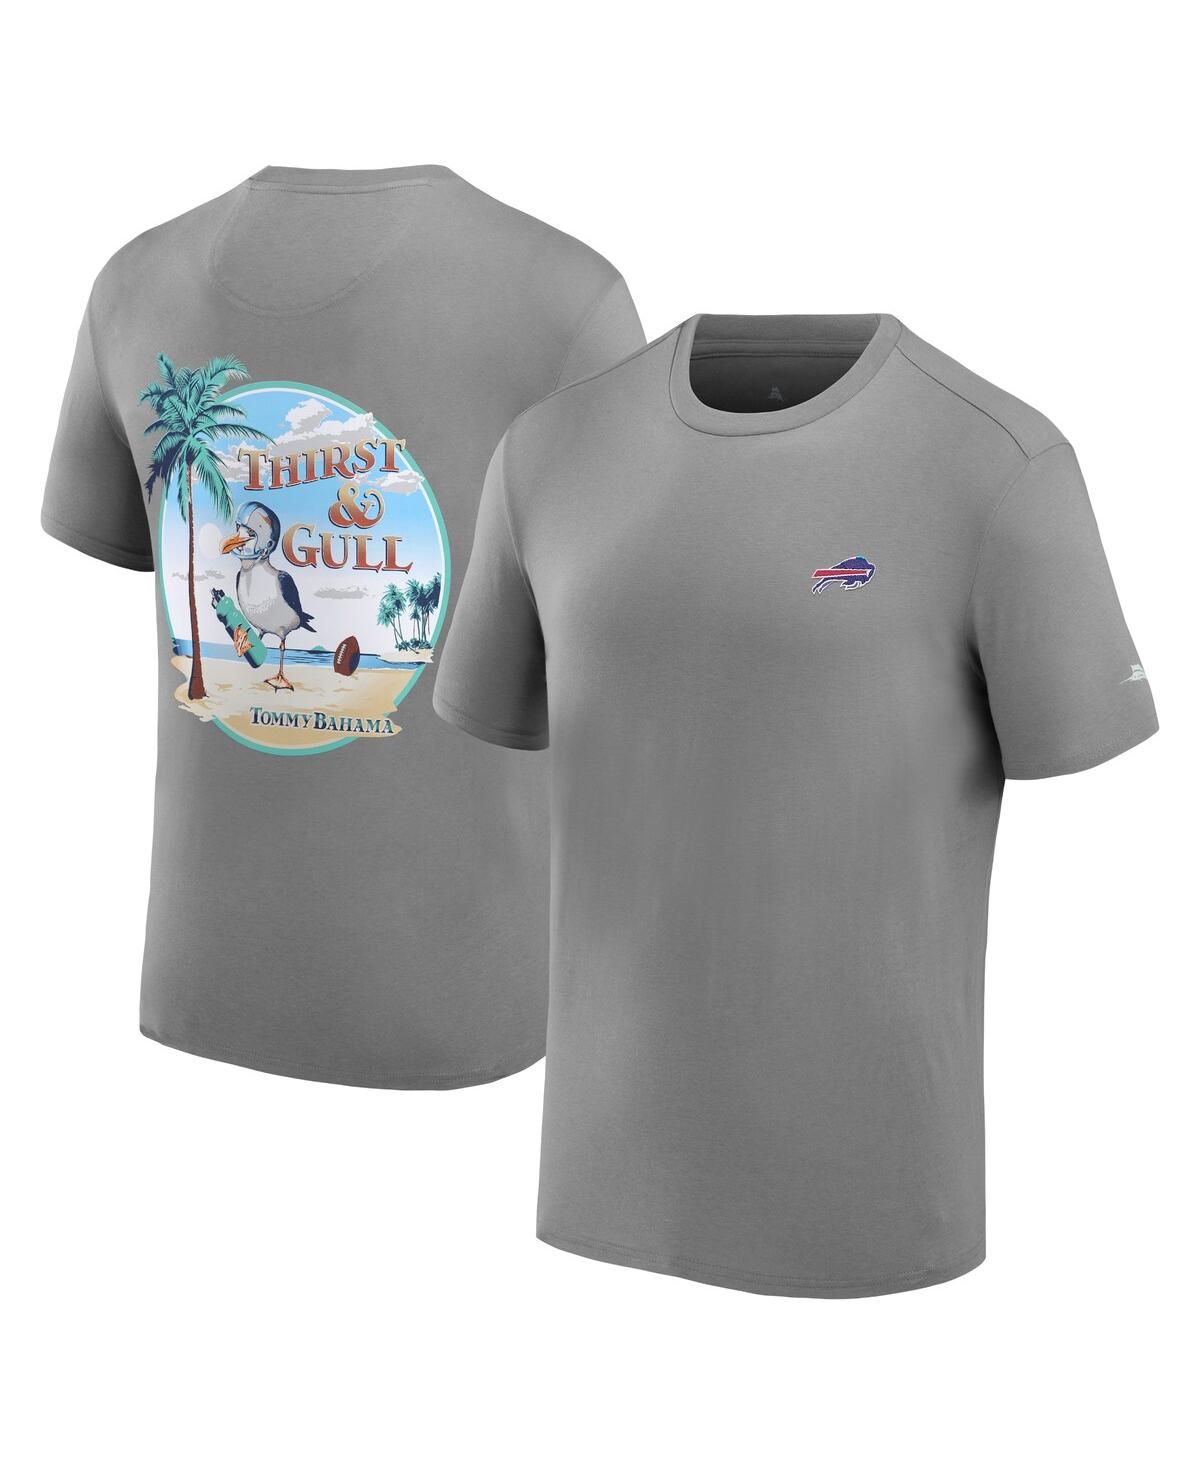 Shop Tommy Bahama Men's  Gray Buffalo Bills Thirst And Gull T-shirt